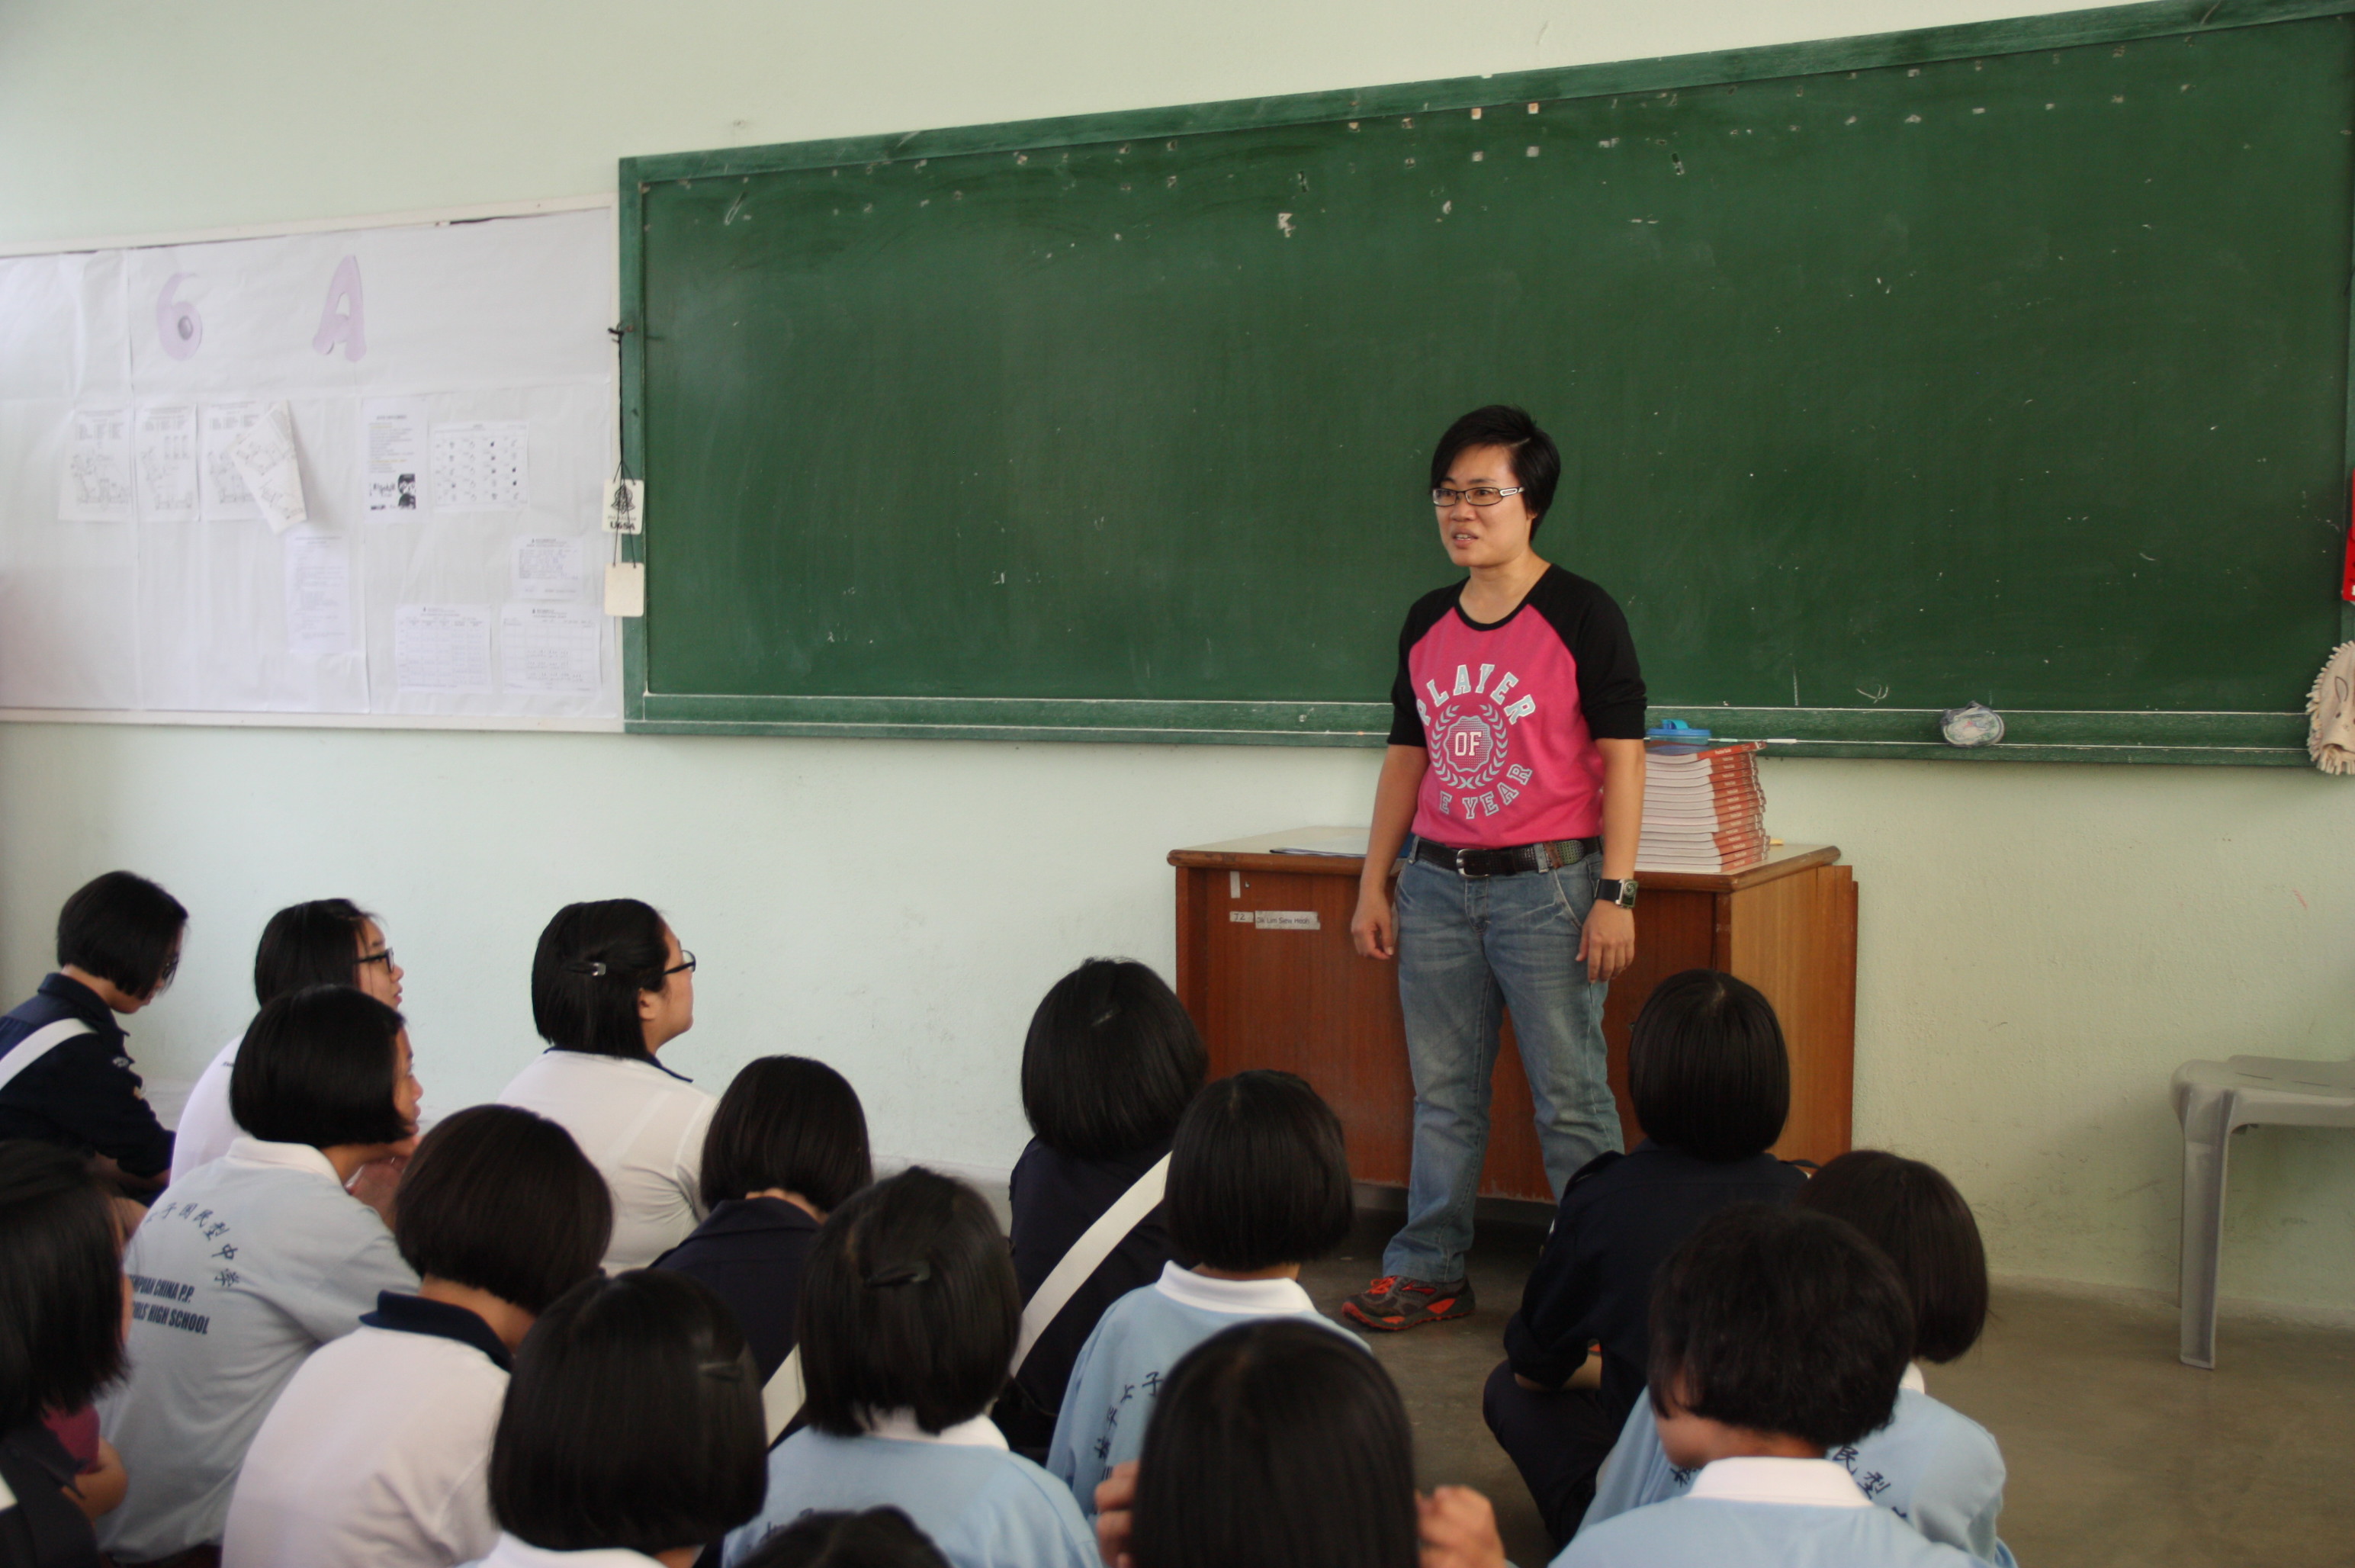 Our teacher advisor, Miss Quah explains the rules to the members.